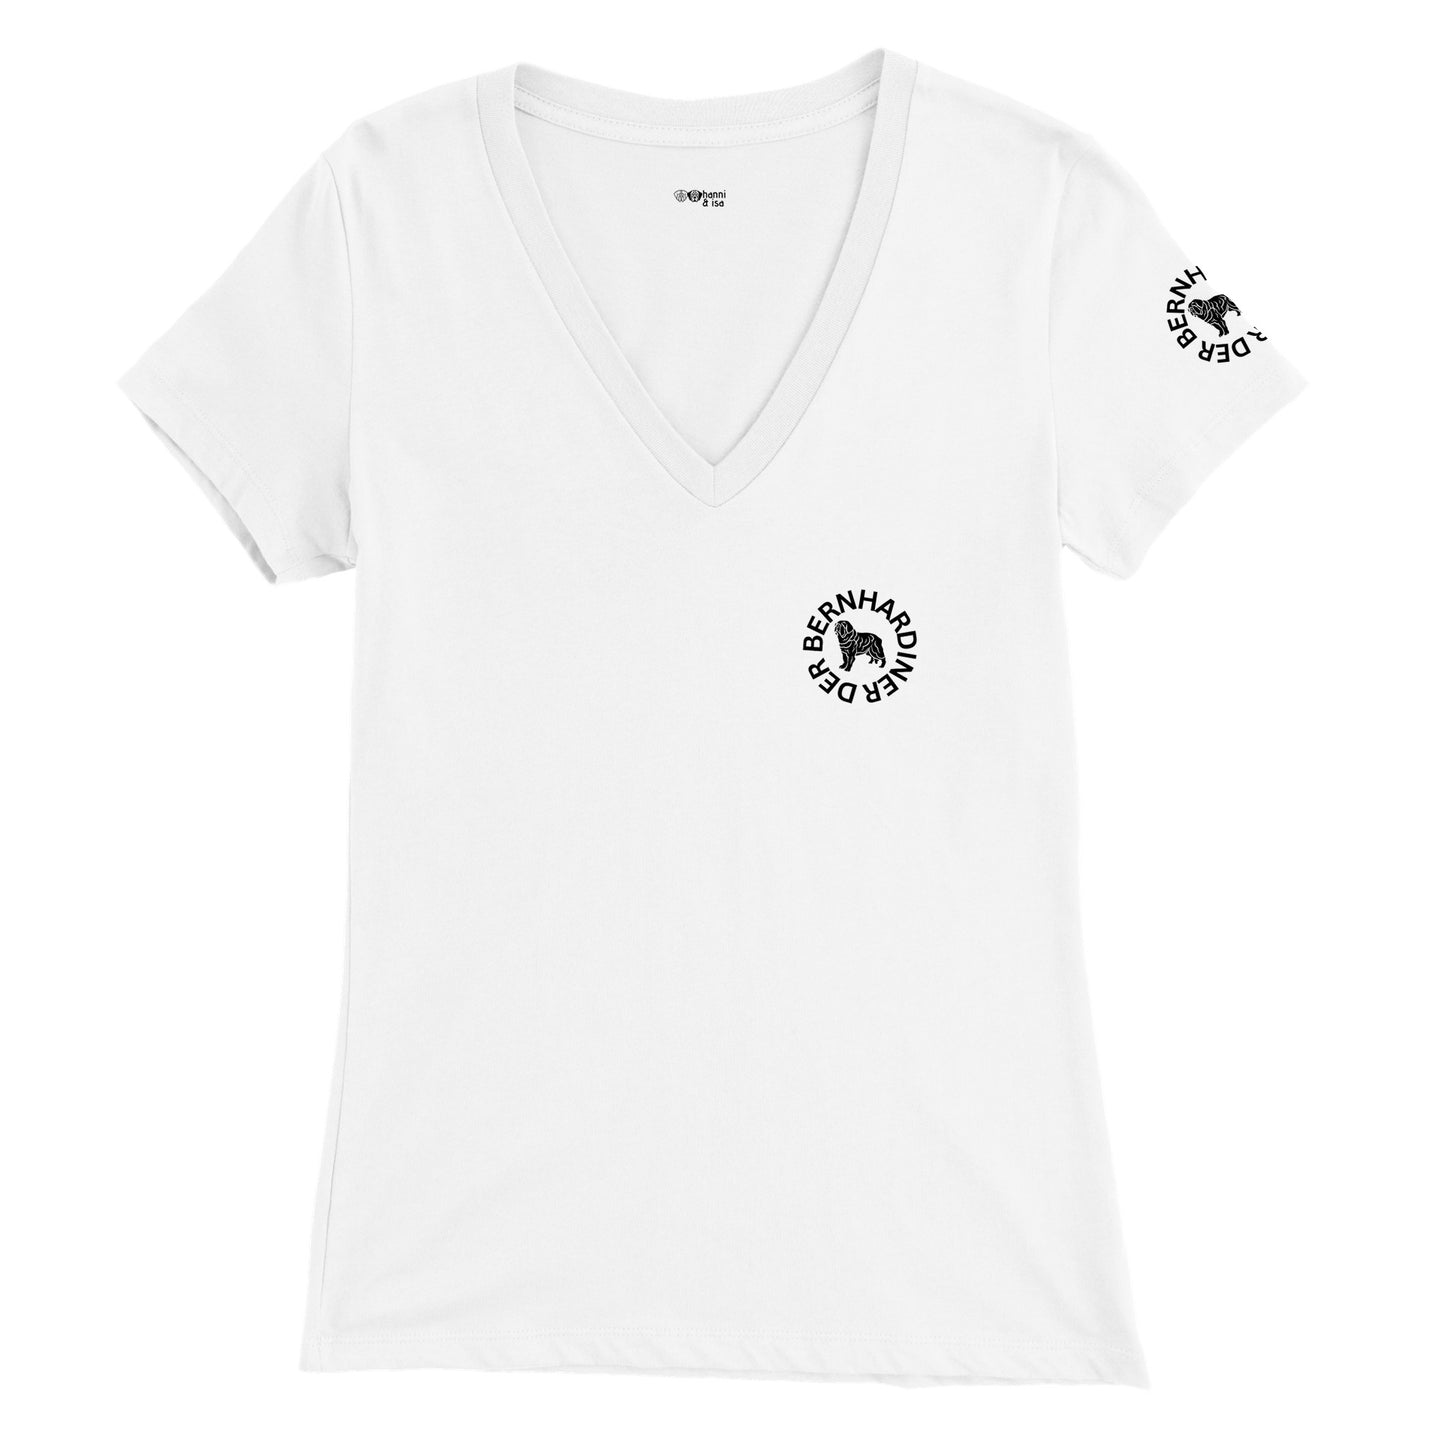 The Saint Bernard White Edition women's V-neck t-shirt